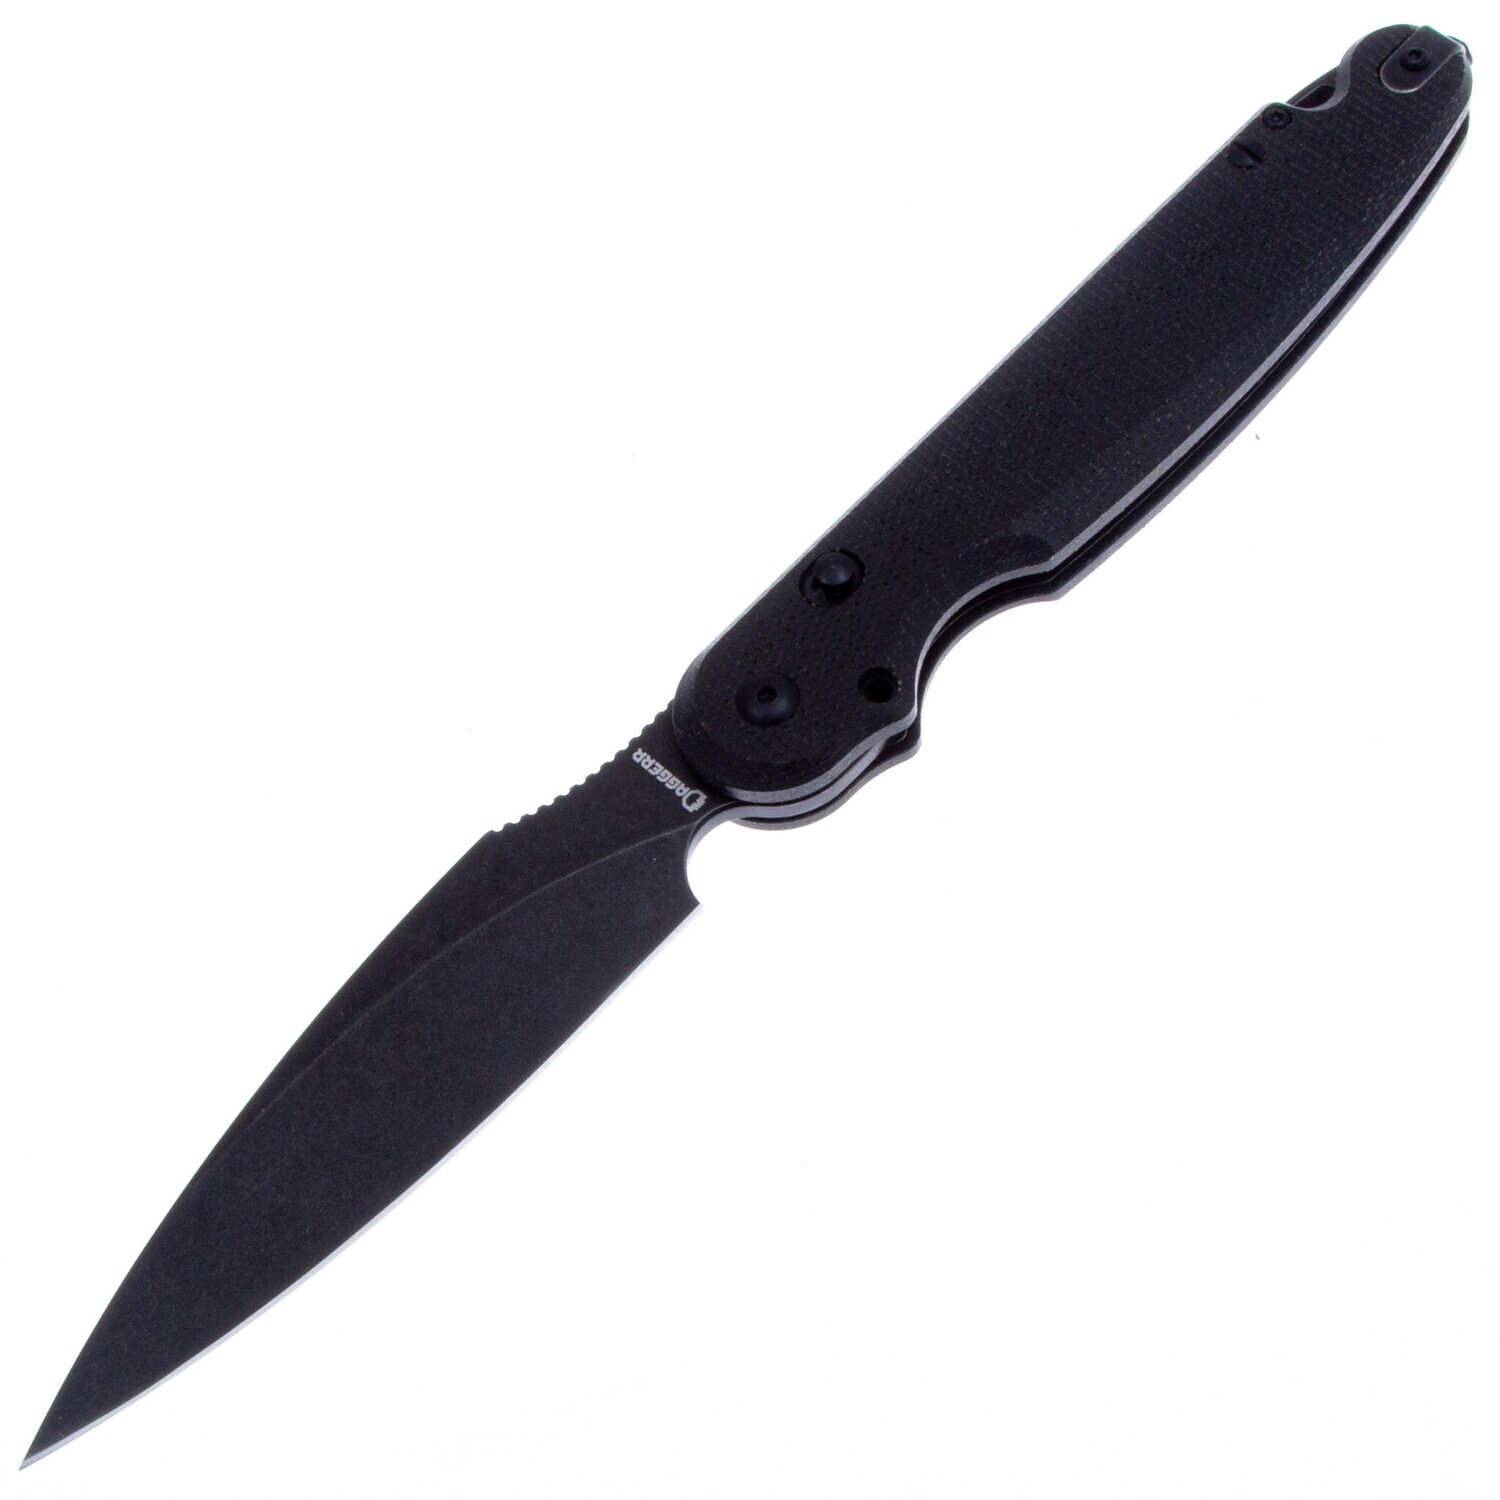 Daggerr Parrot knife Black micarta D2 BW